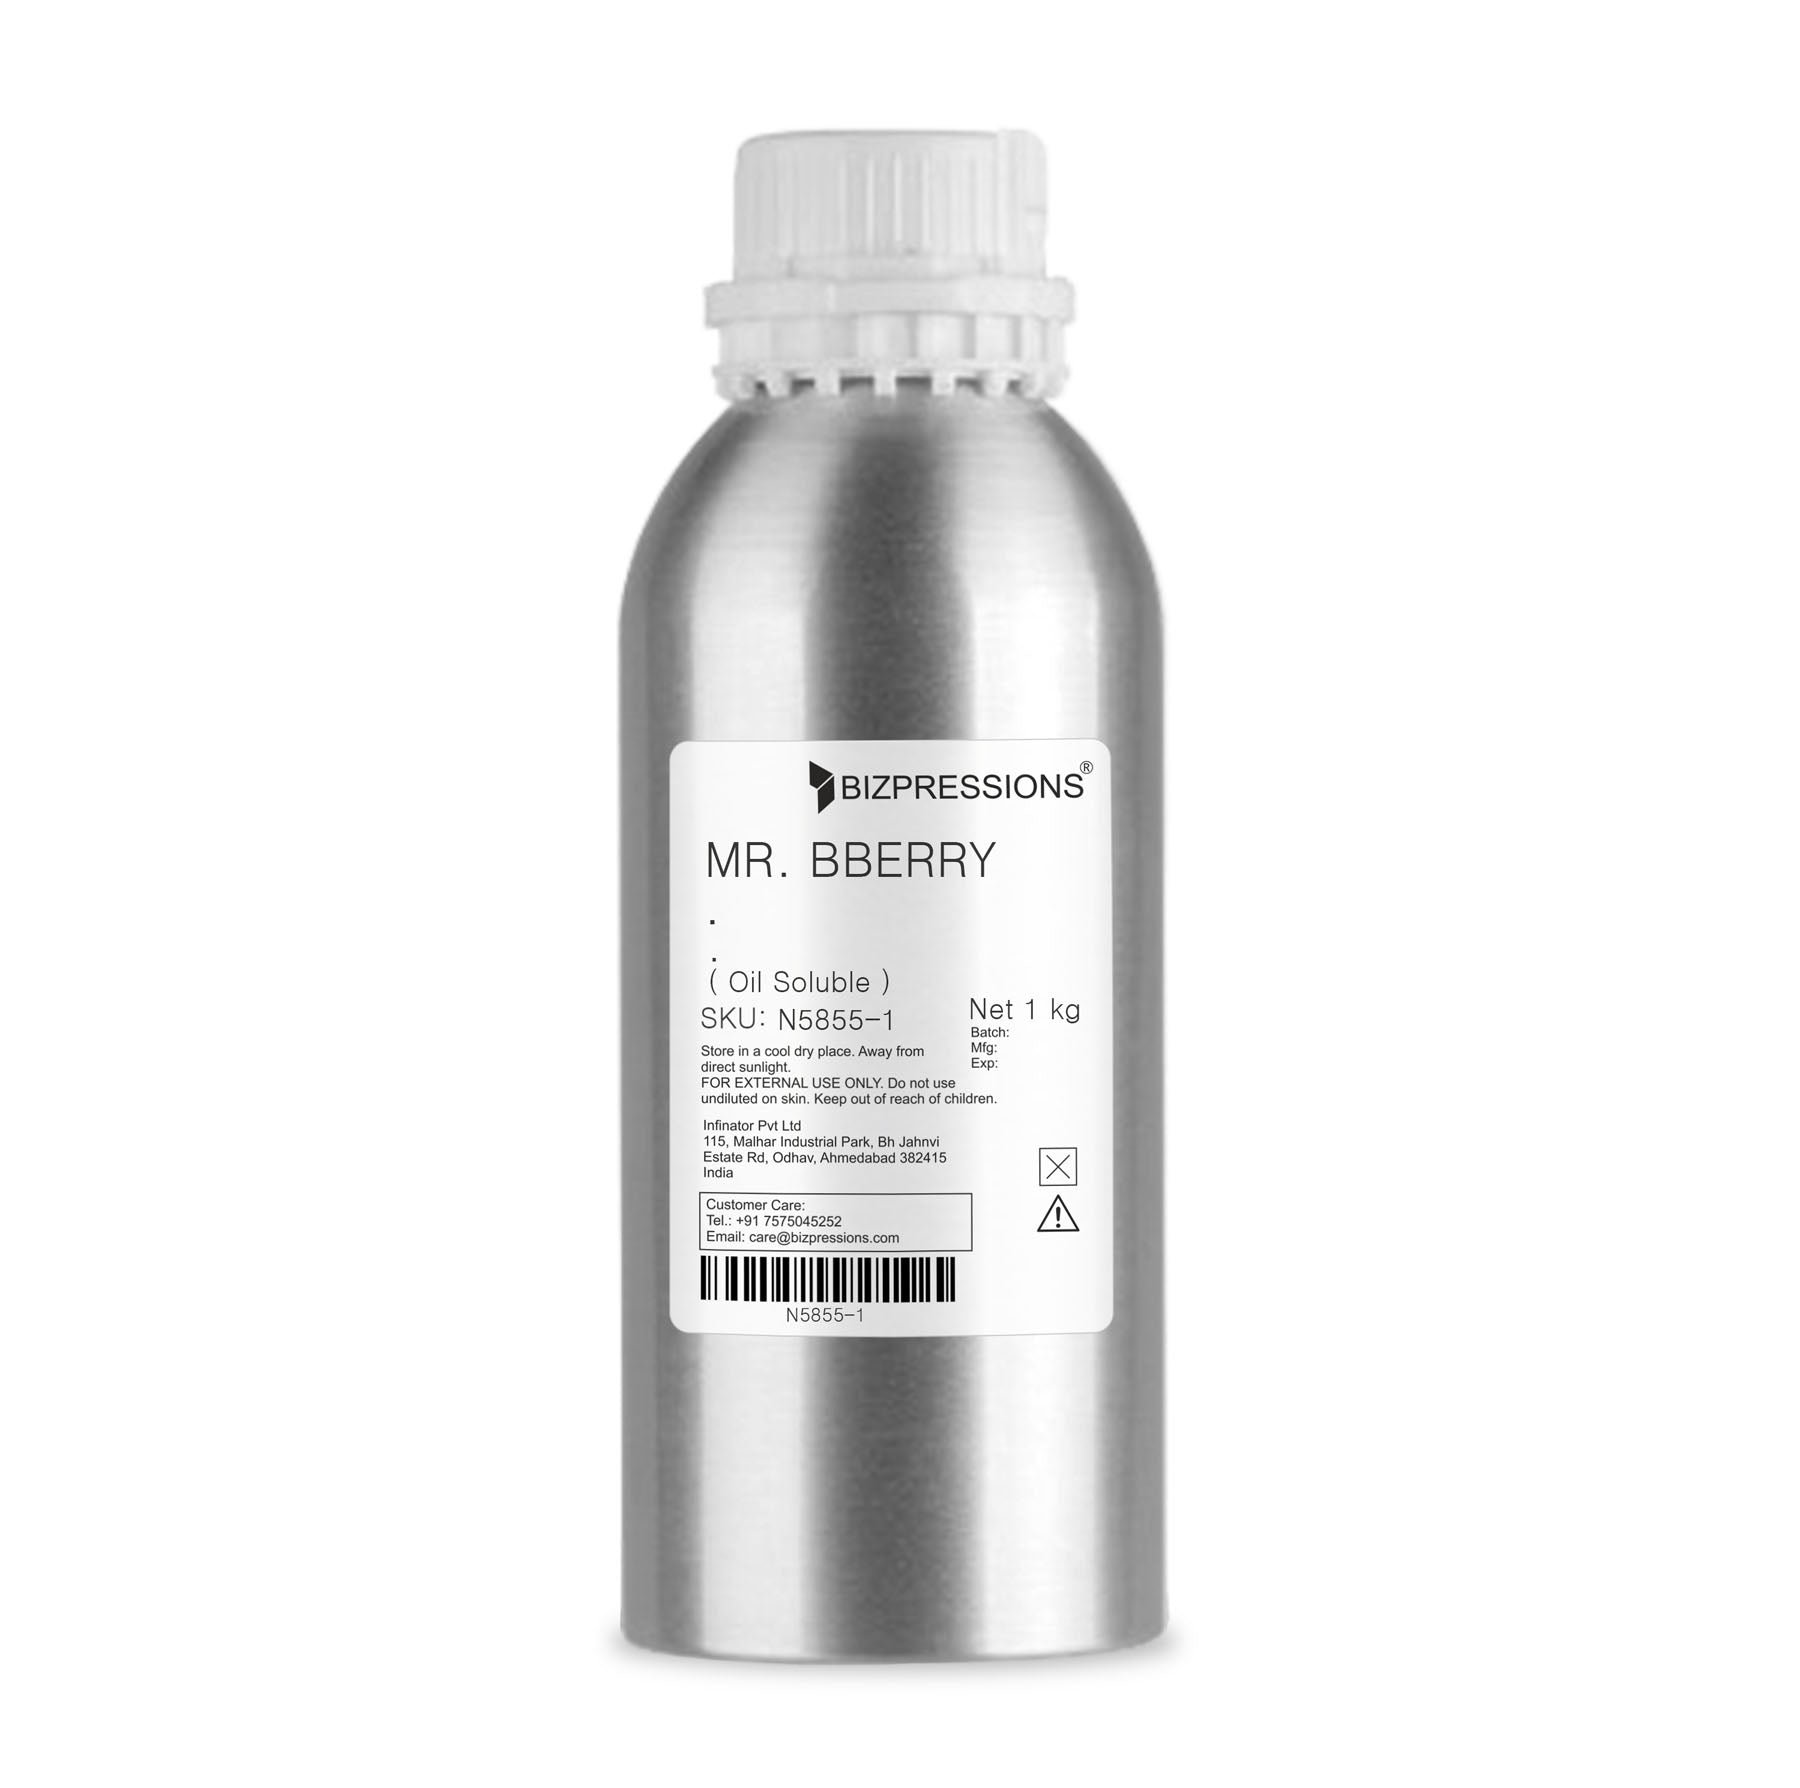 MR. BBERRY - Fragrance ( Oil Soluble ) - 1 kg